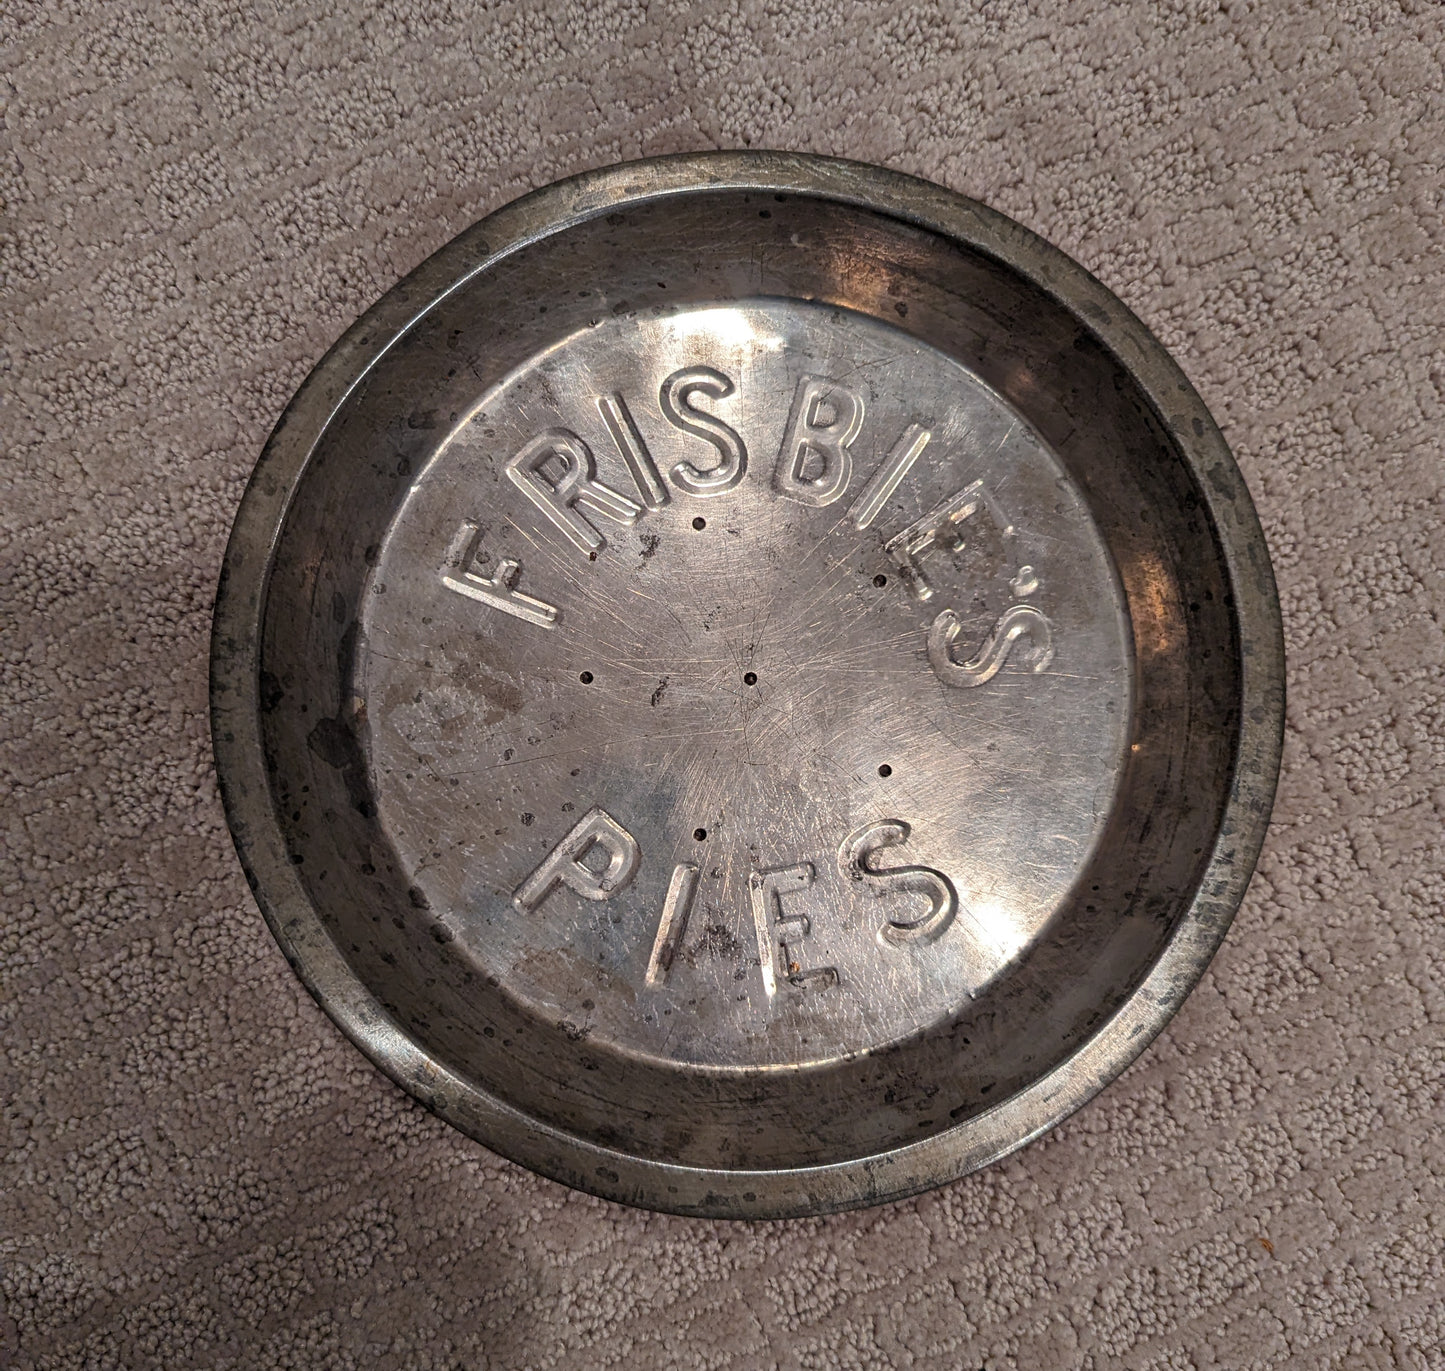 Frisbie's Pies Tin (c. 1920's)